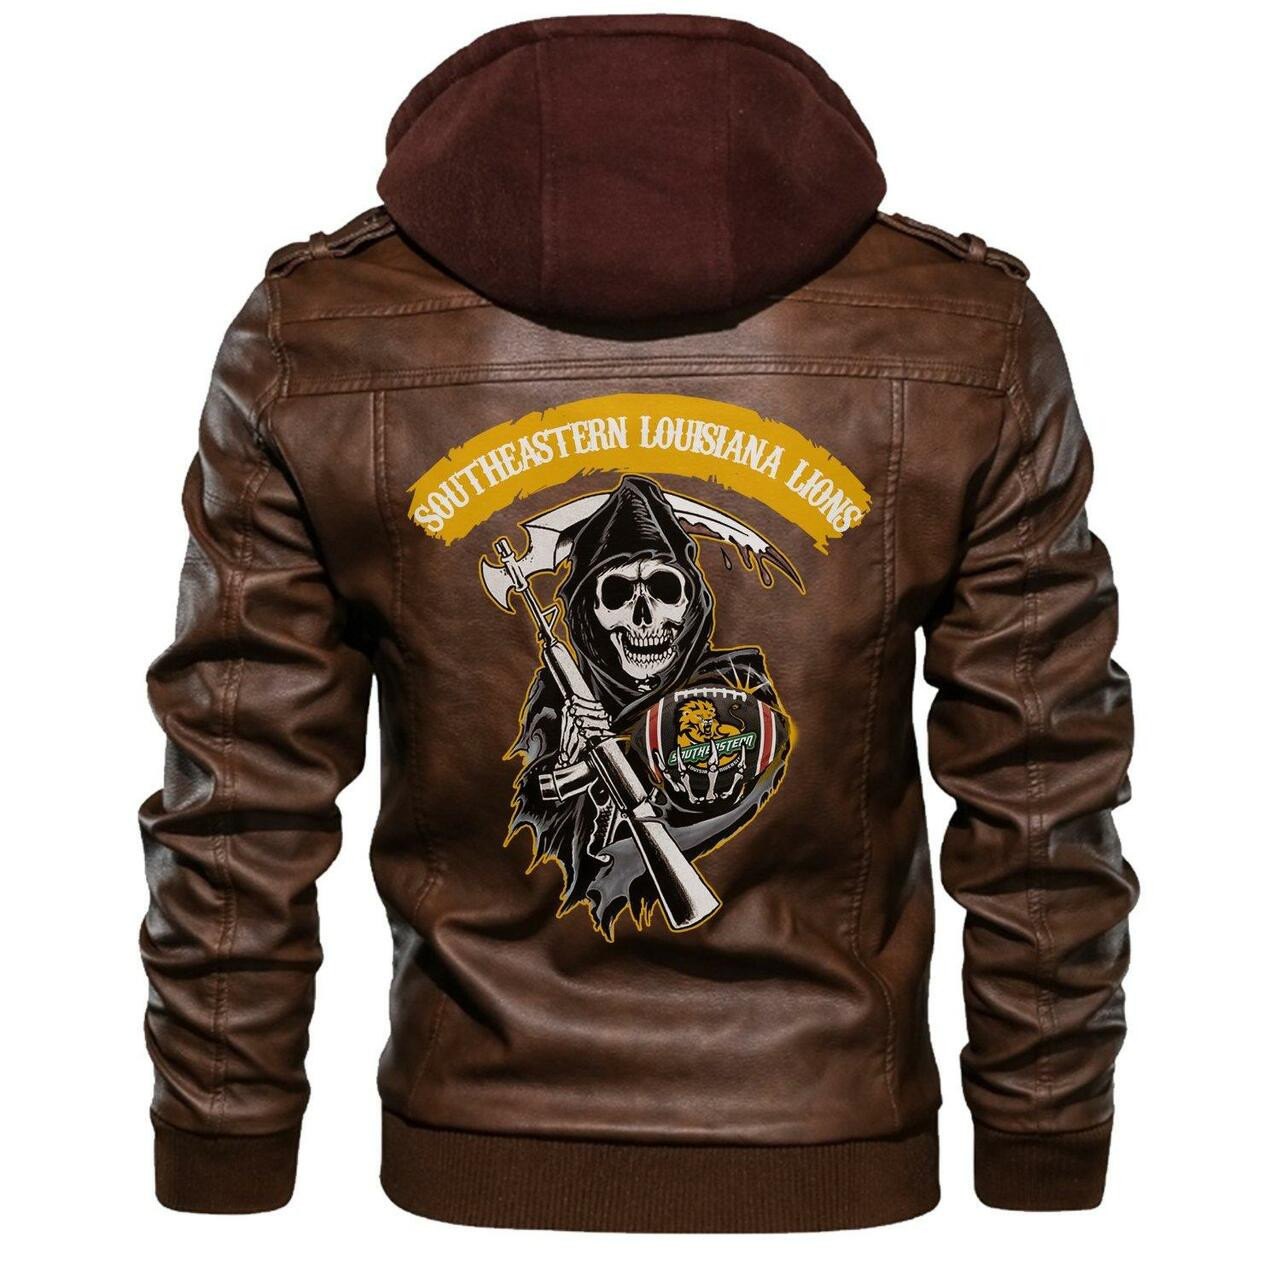 Top leather jacket Sells Best on Techcomshop 19